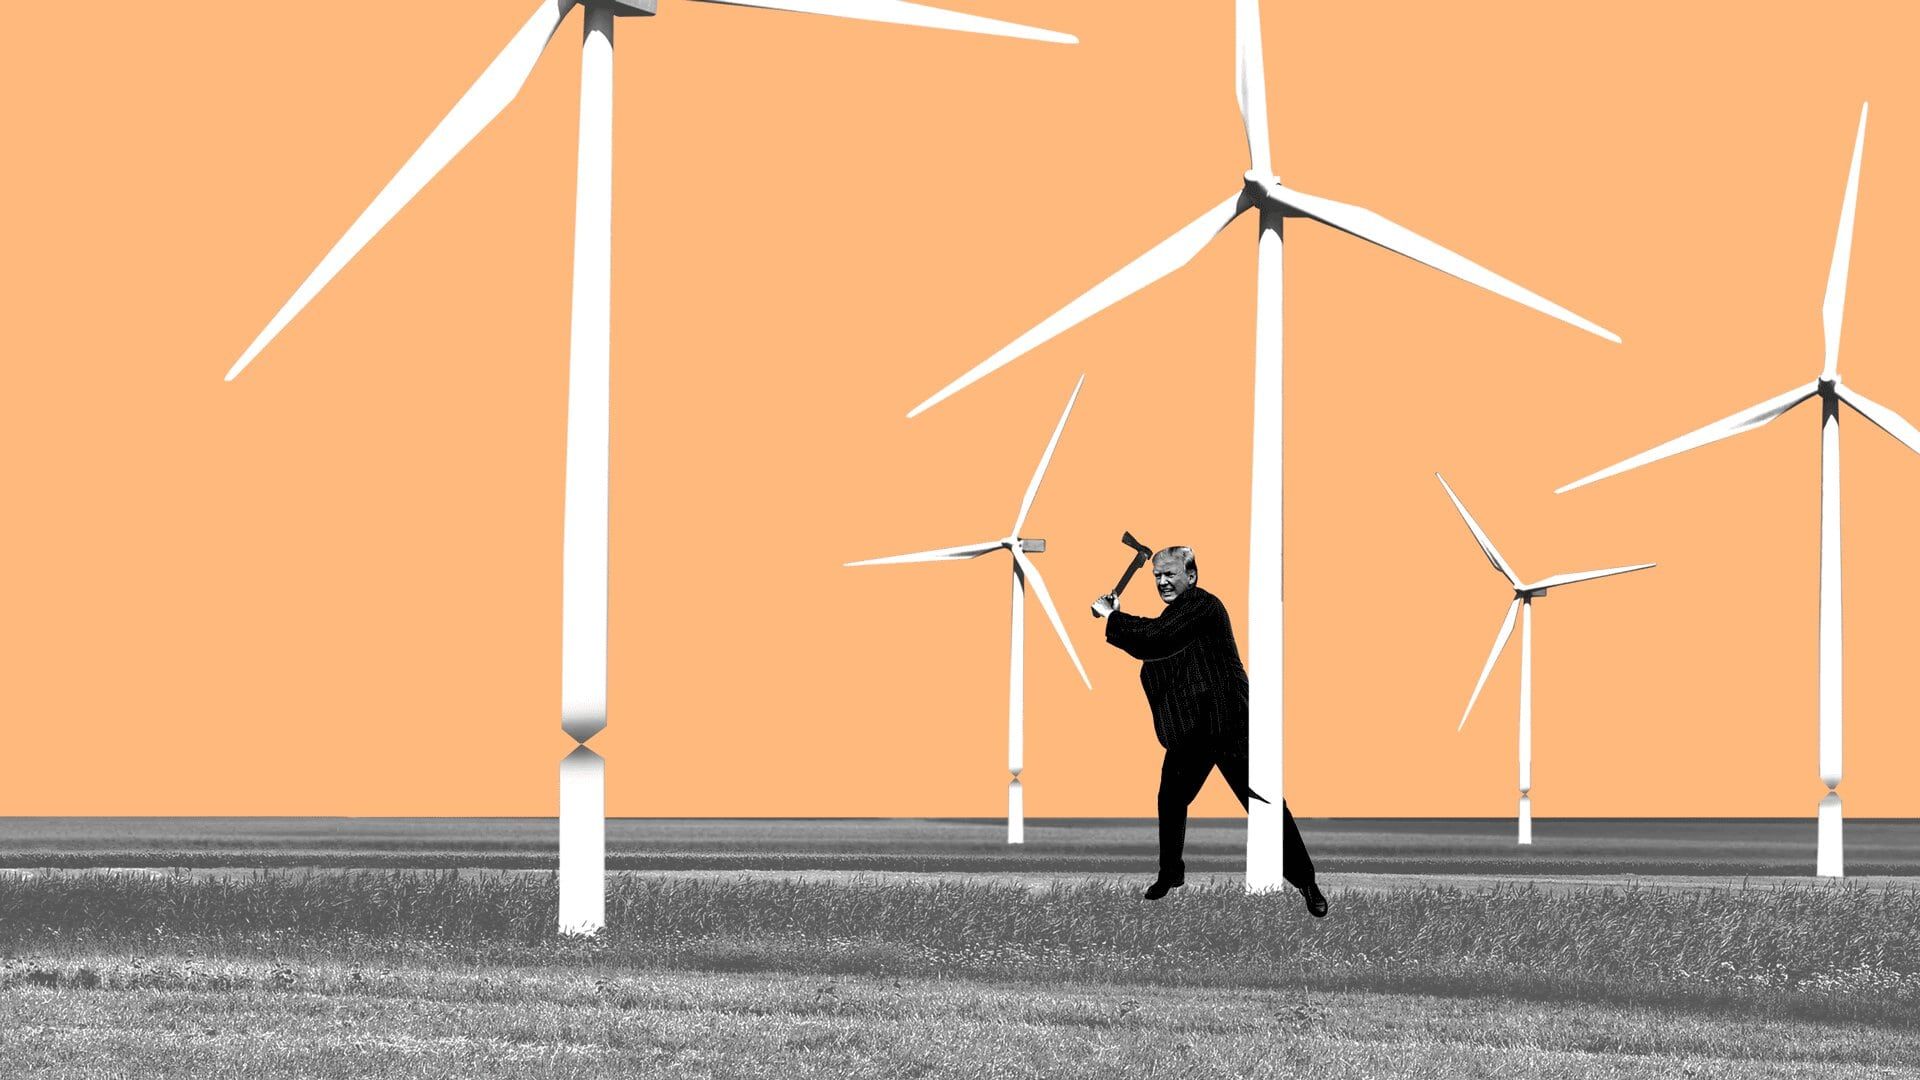 donald trump taking an axe to wind turbines